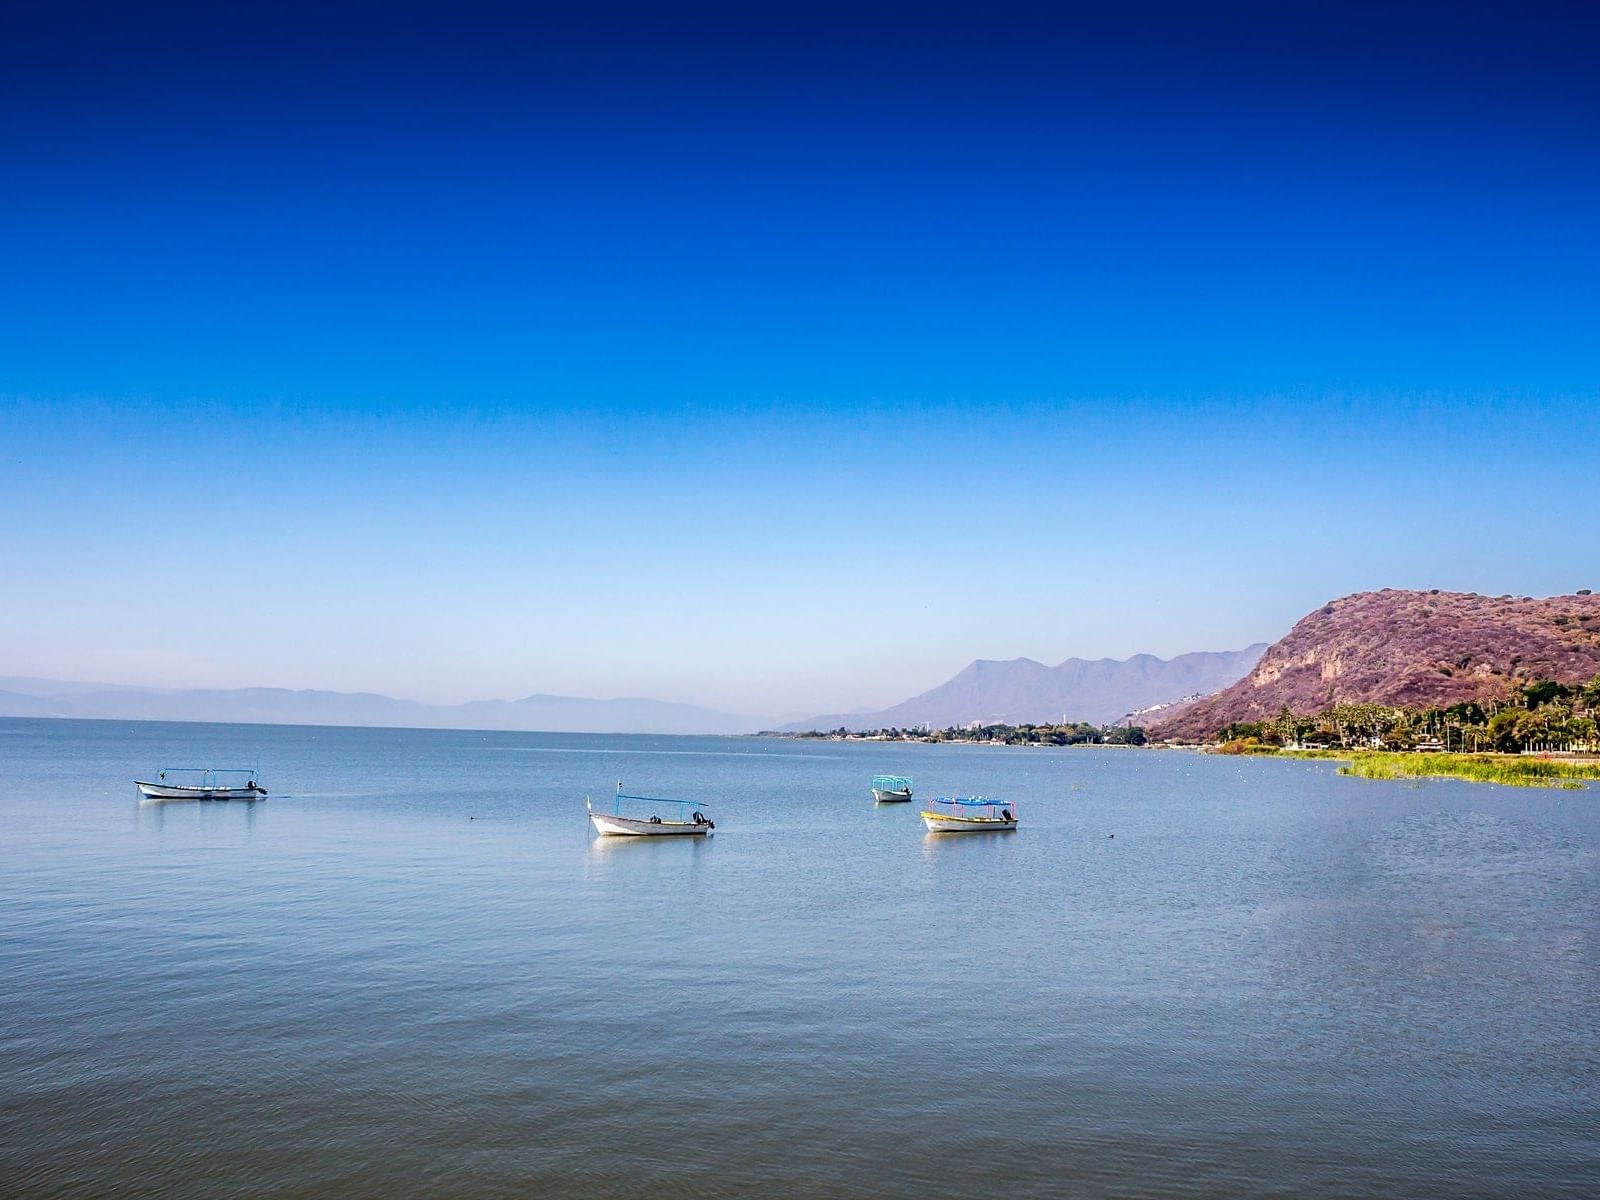 Landscape view of the Lake Chapala near Grand Fiesta Americana